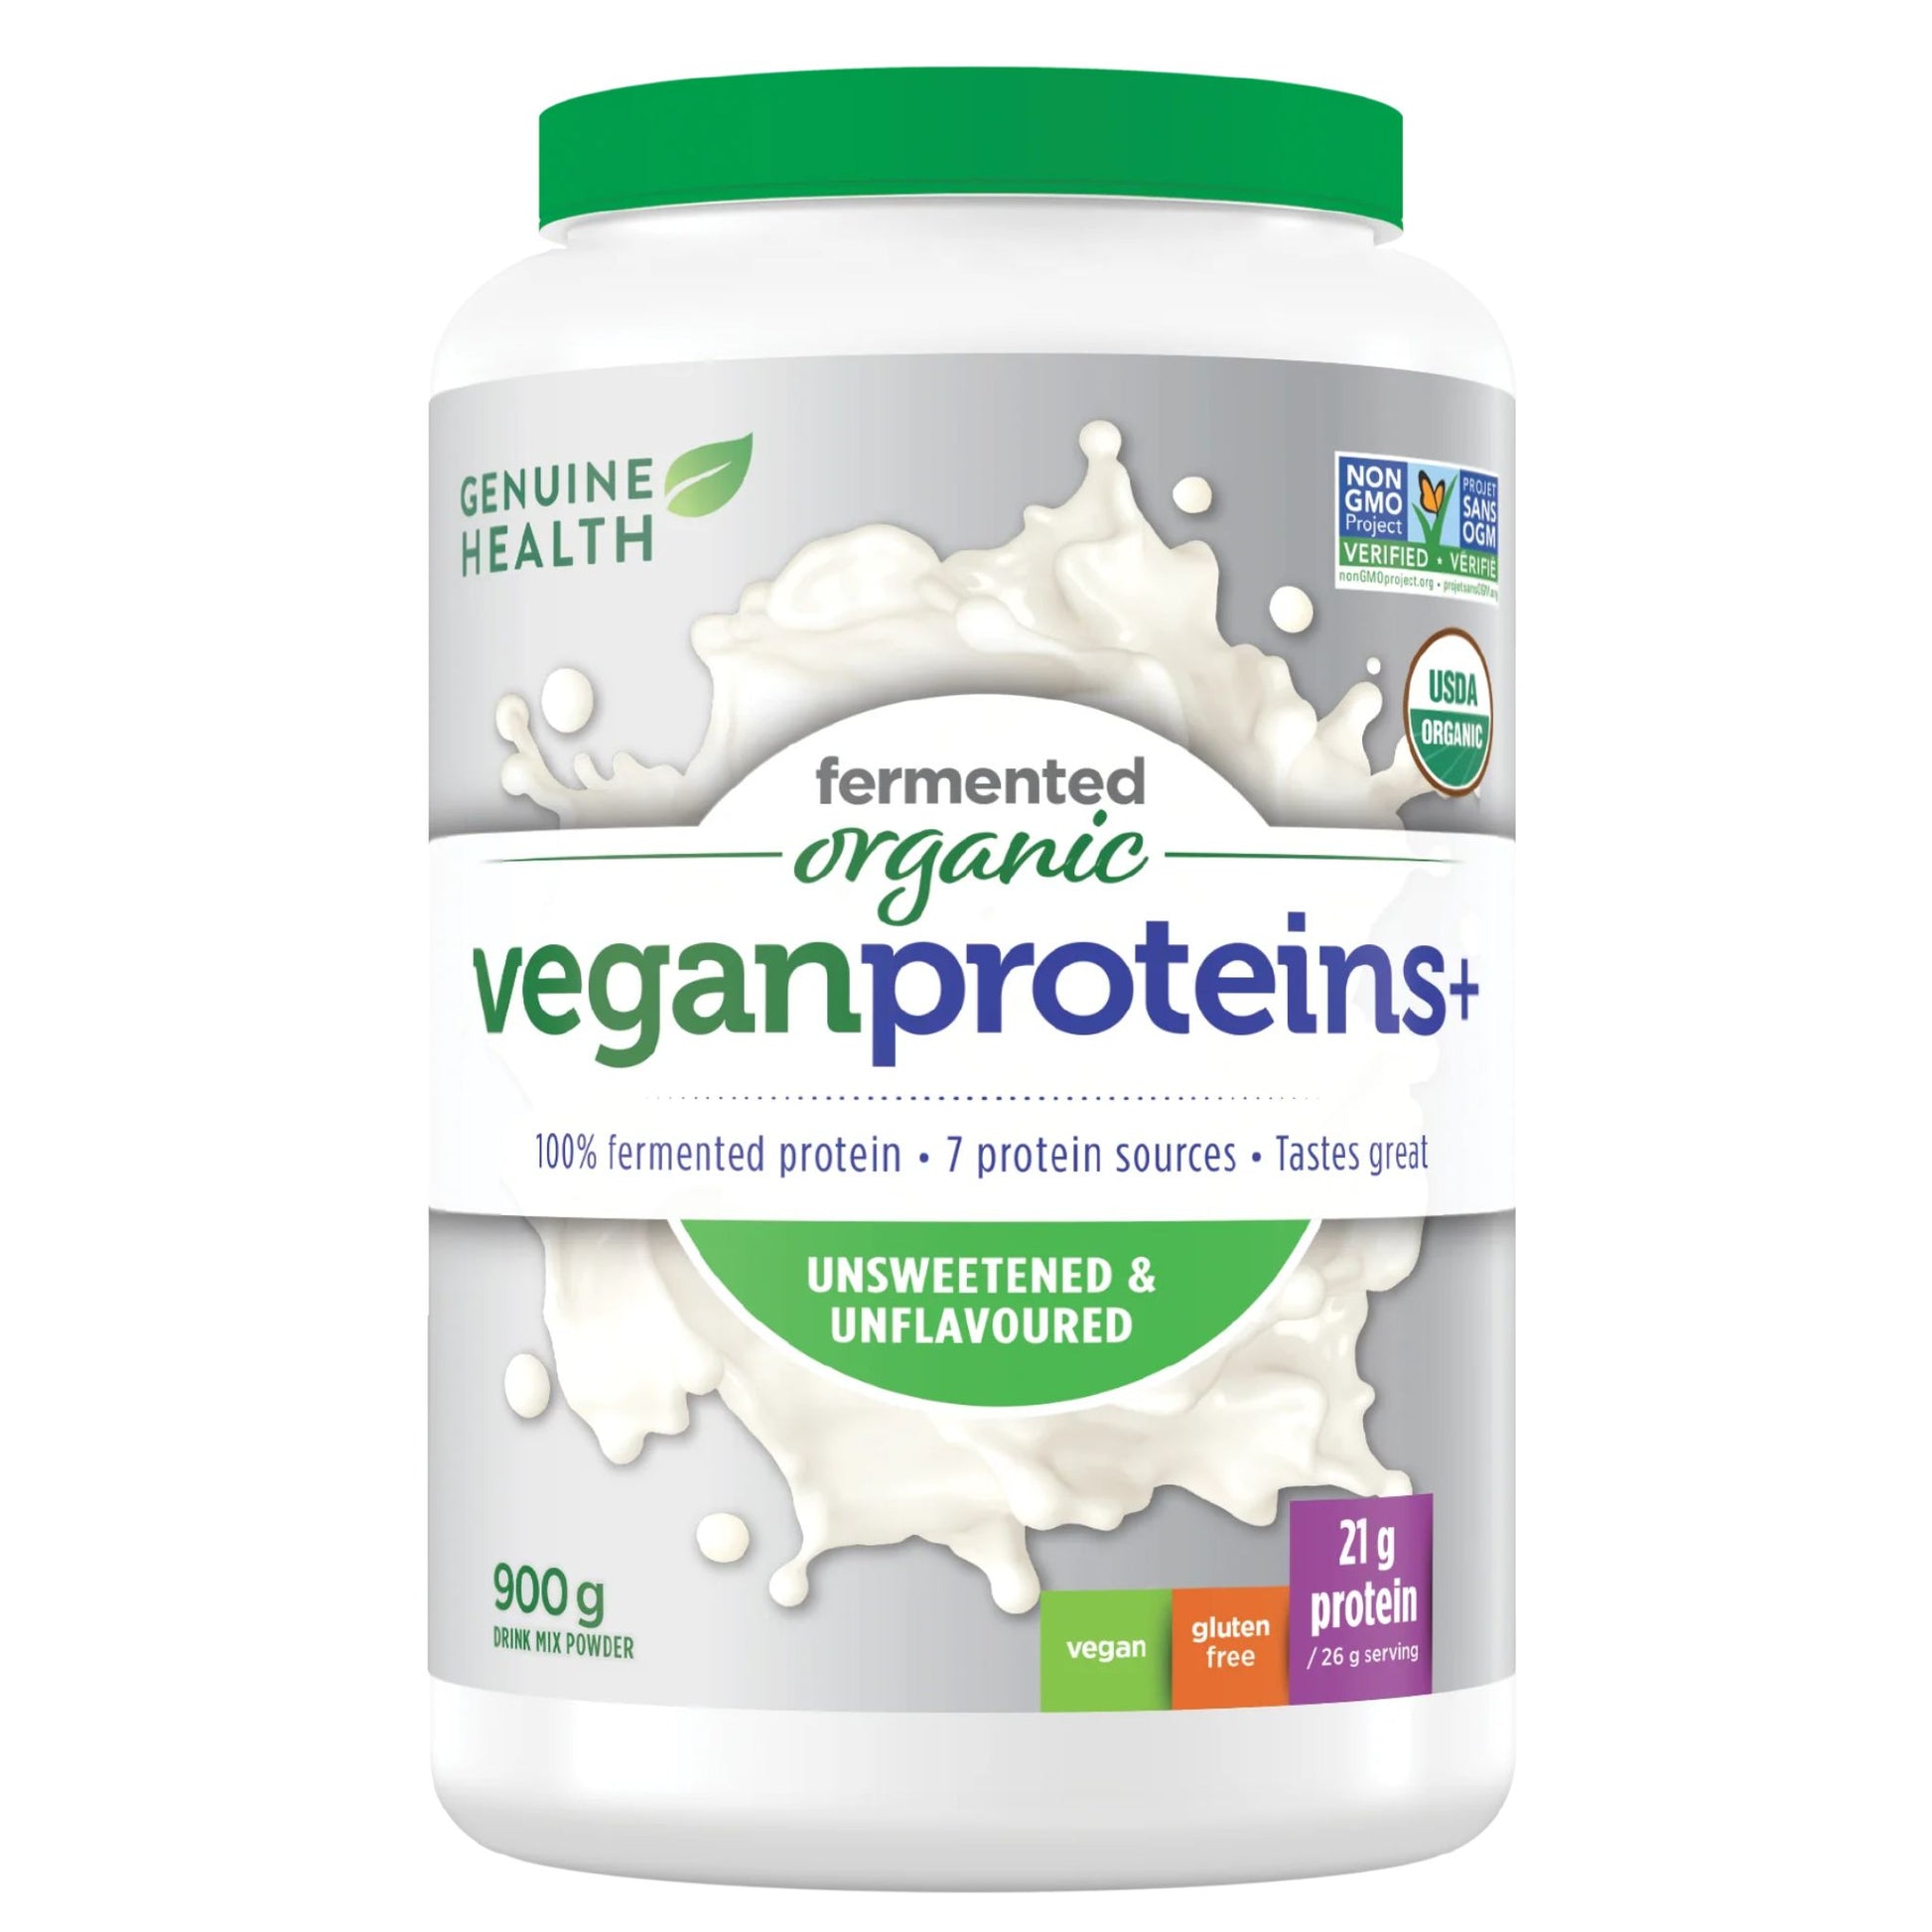 Unsweetened & Unfalvoured 900g | Genuine Health Organic Fermented Vegan proteins // unflavoured